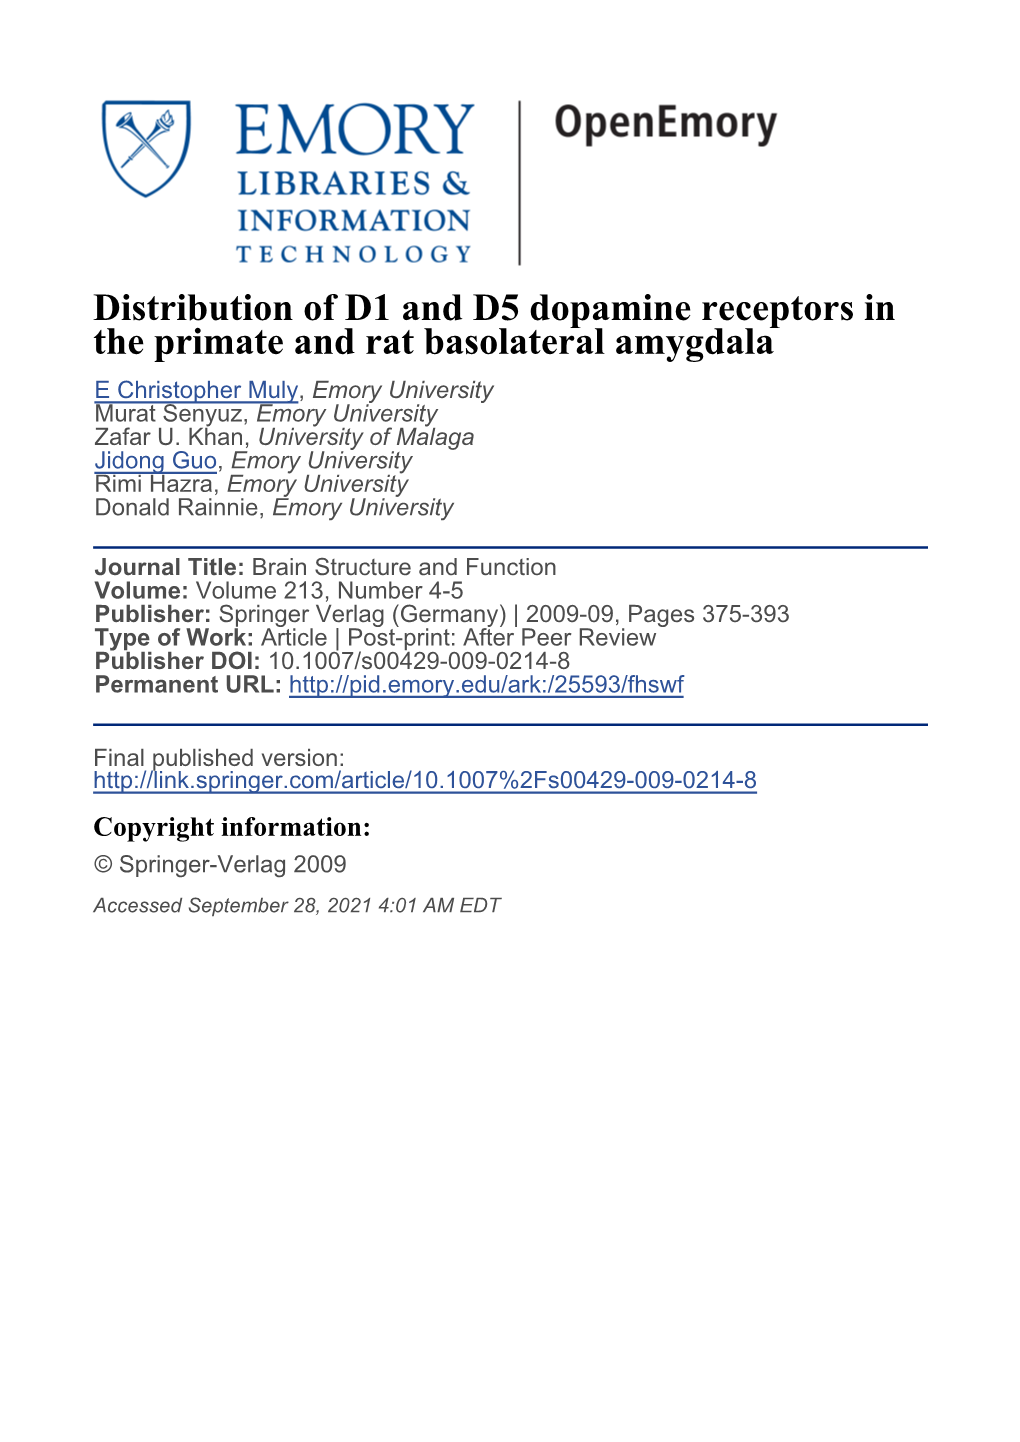 Distribution of D1 and D5 Dopamine Receptors in the Primate and Rat Basolateral Amygdala E Christopher Muly, Emory University Murat Senyuz, Emory University Zafar U